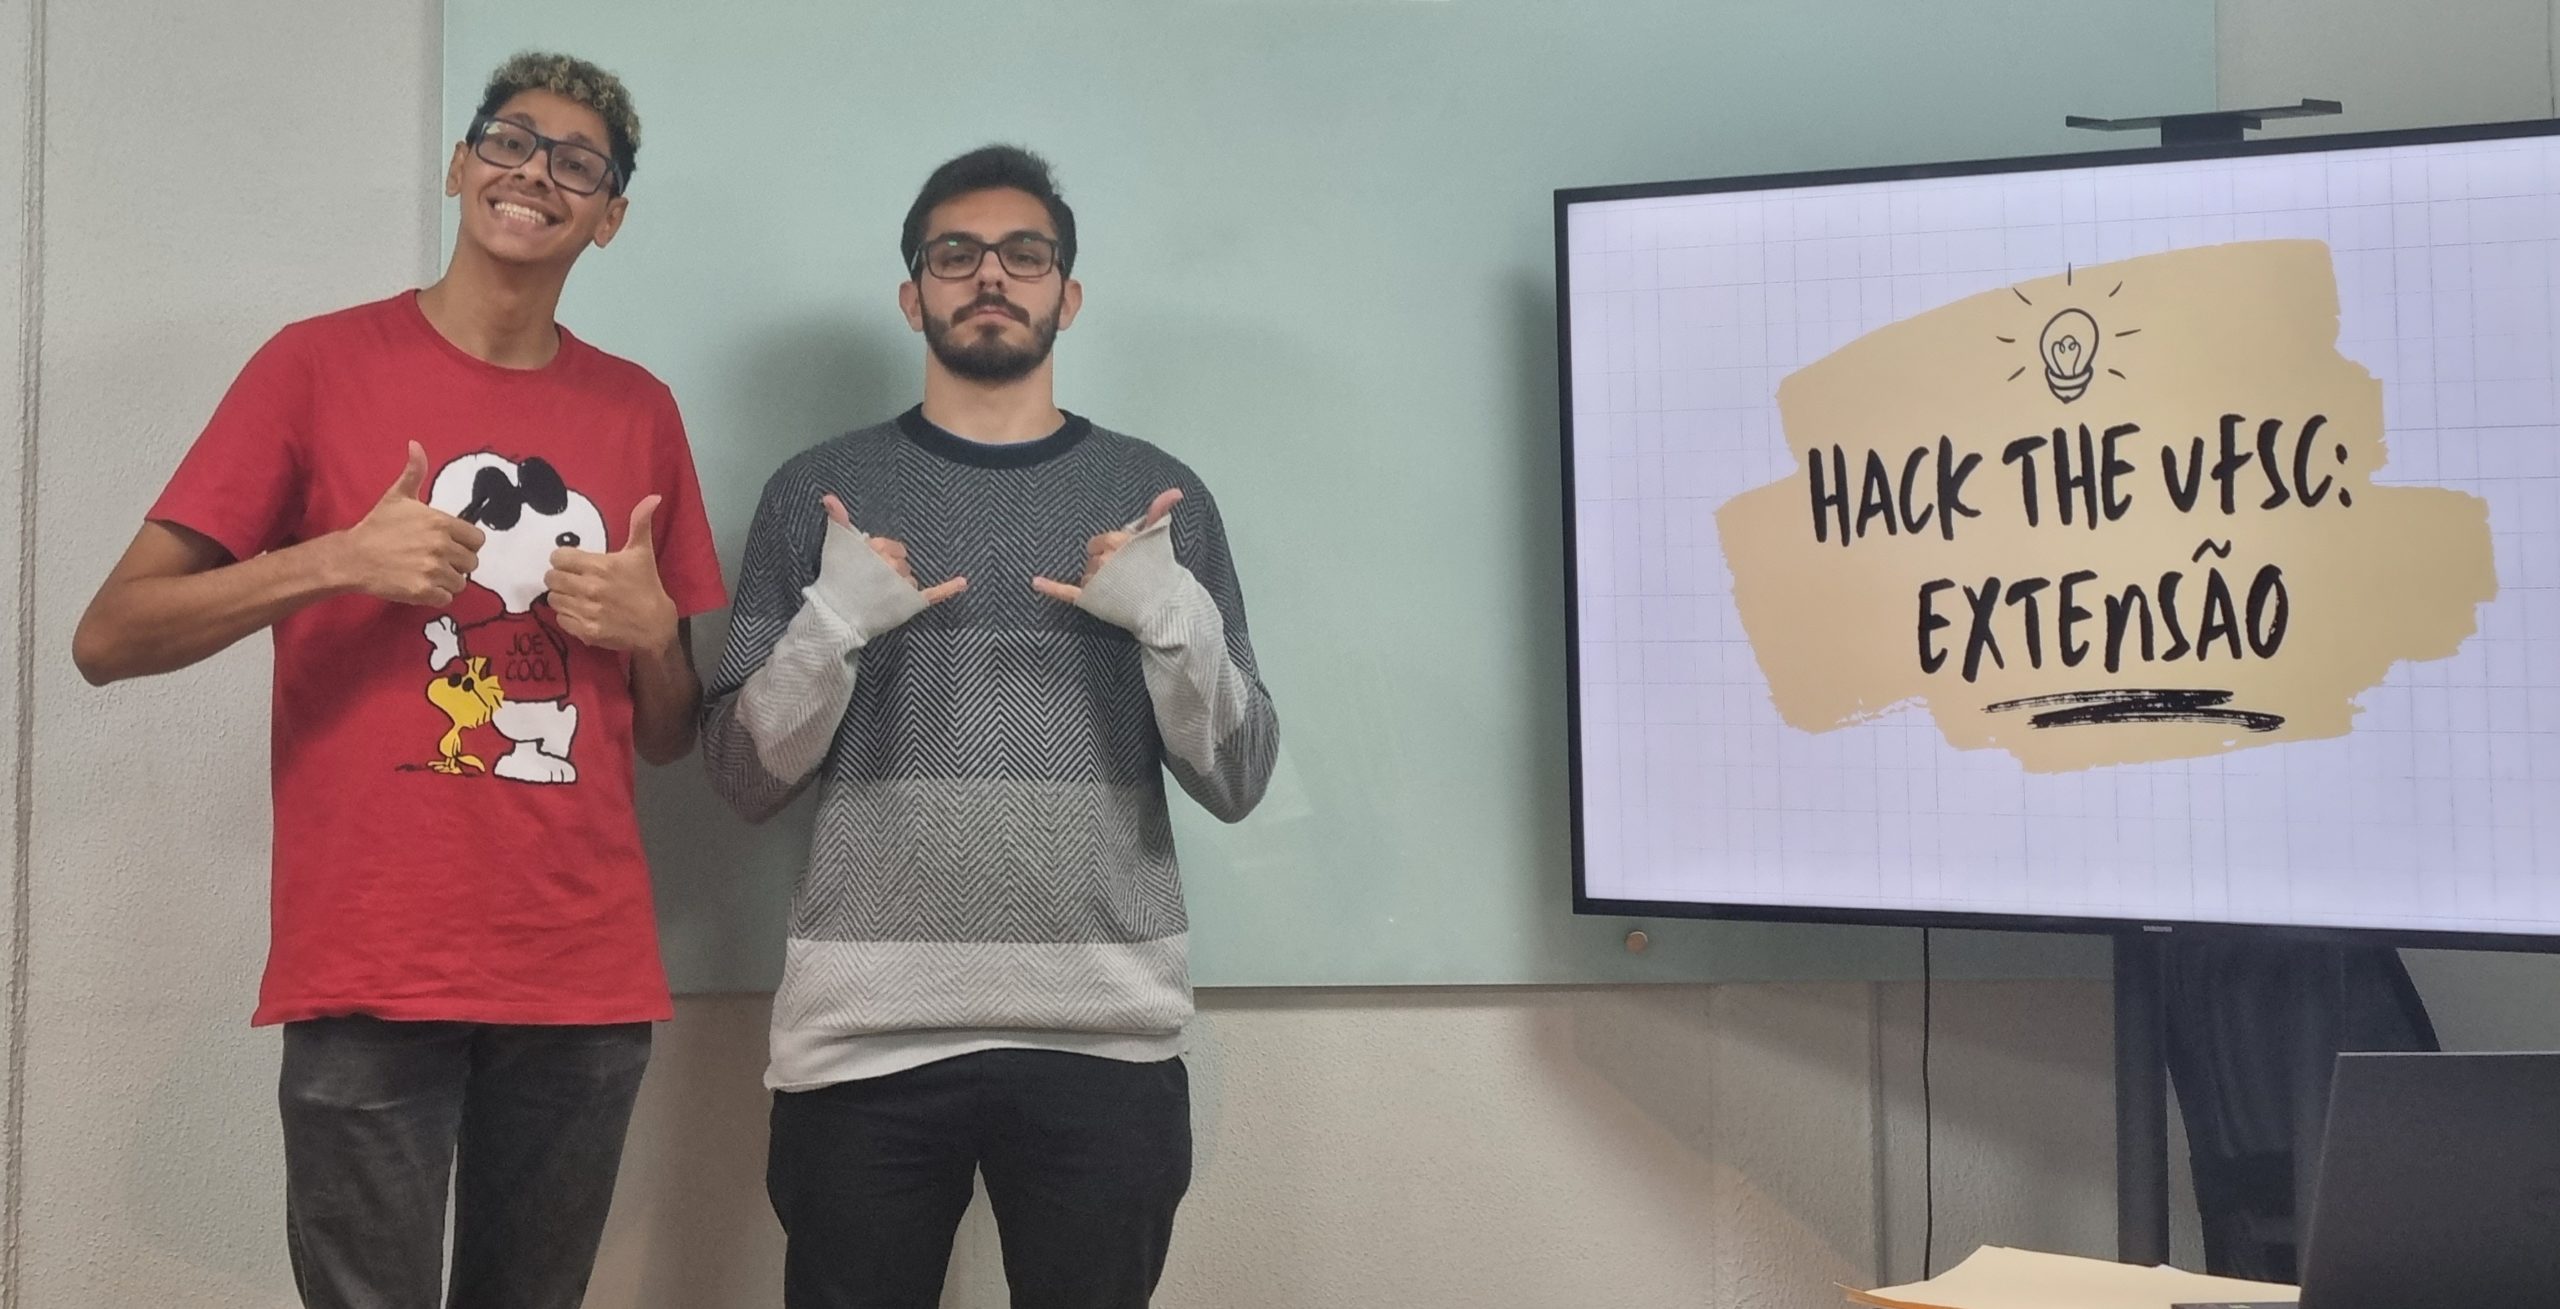 Pitch Hack the UFSC - Extensão